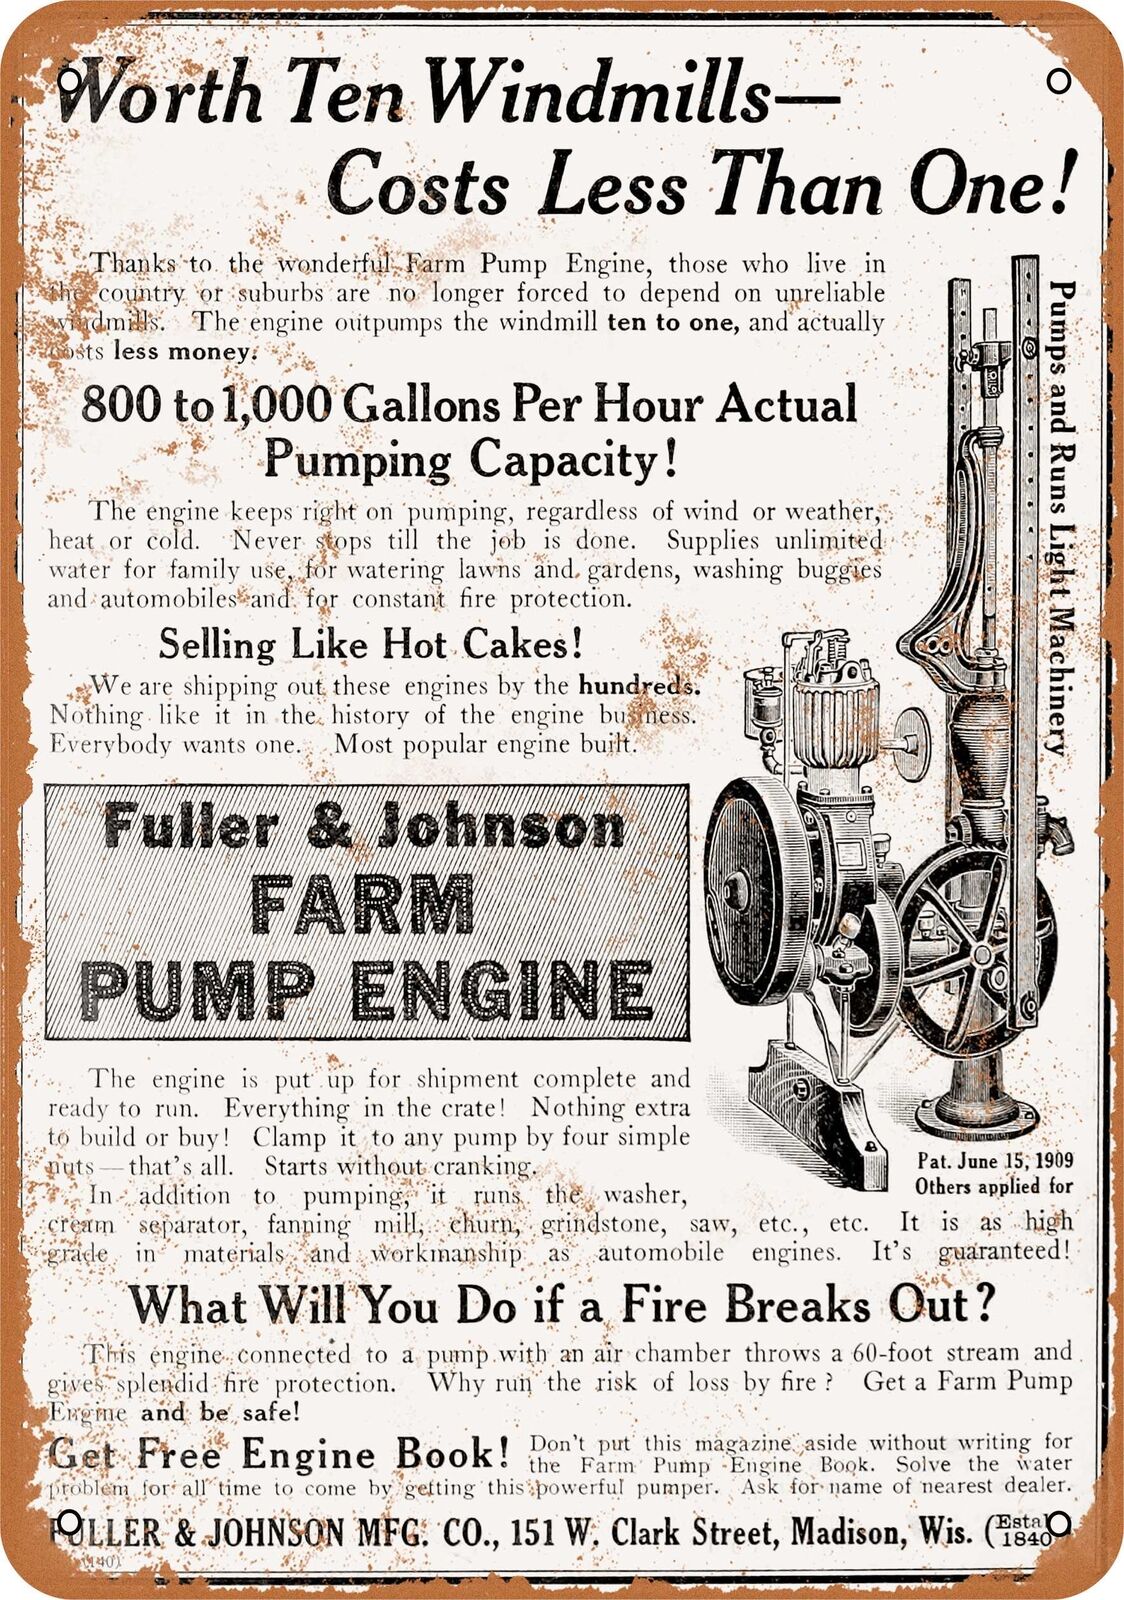 Metal Sign - 1910 Fuller & Johnson Farm Pump Engine - Vintage Look Reproduction